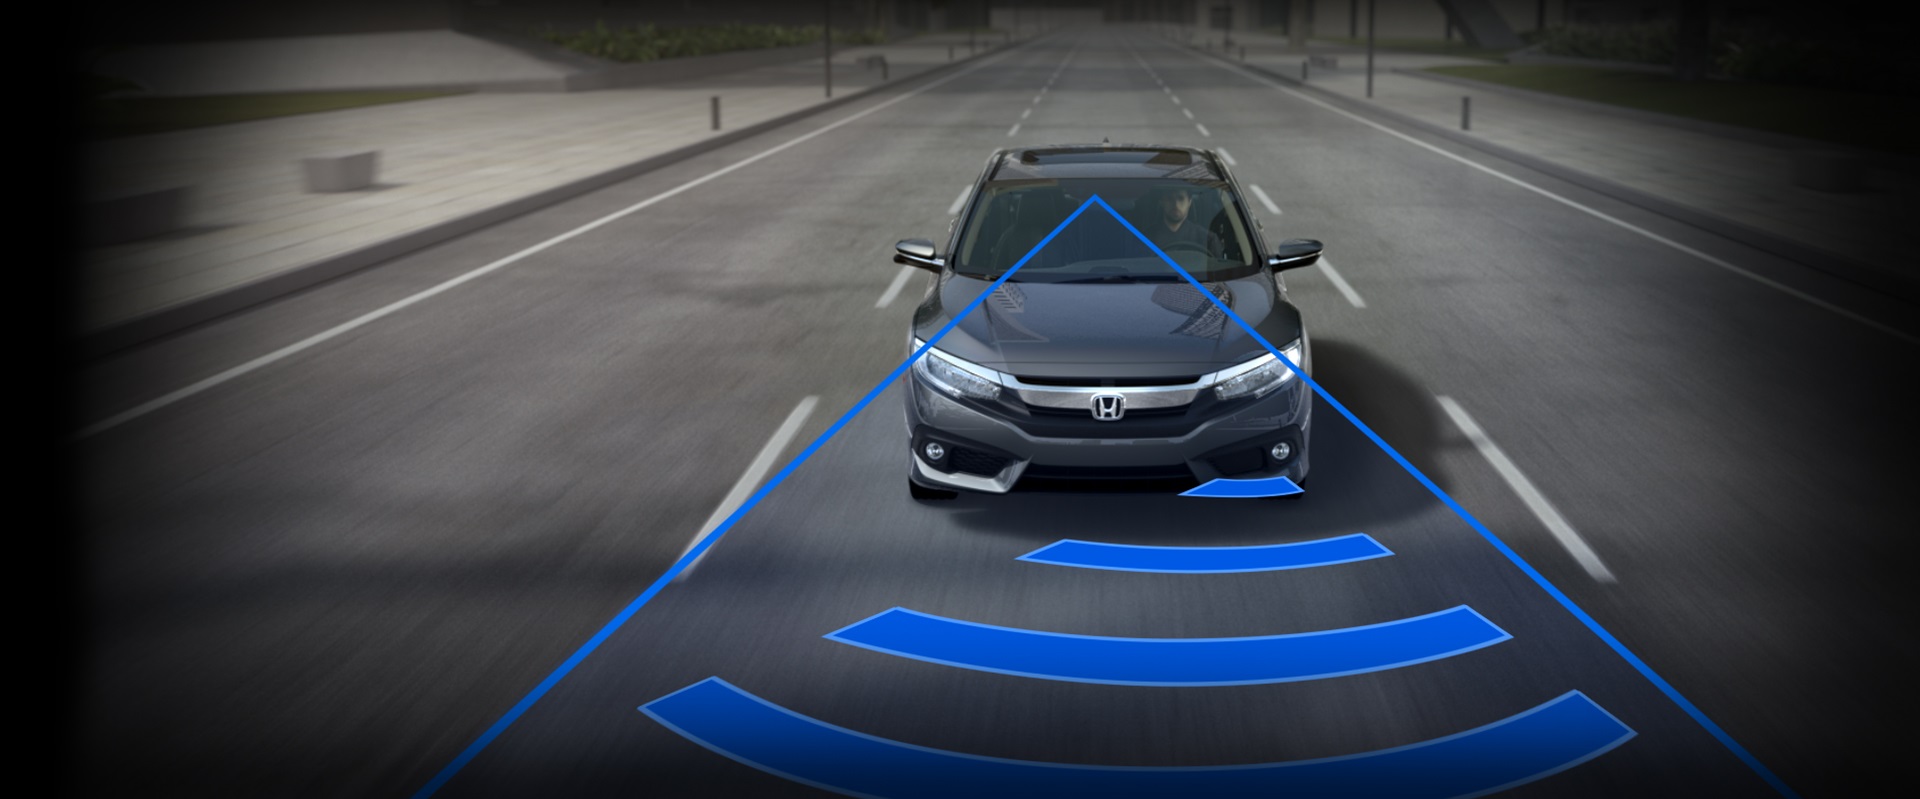 2016-Honda-Civic-Collision-Mitigation-Braking-System